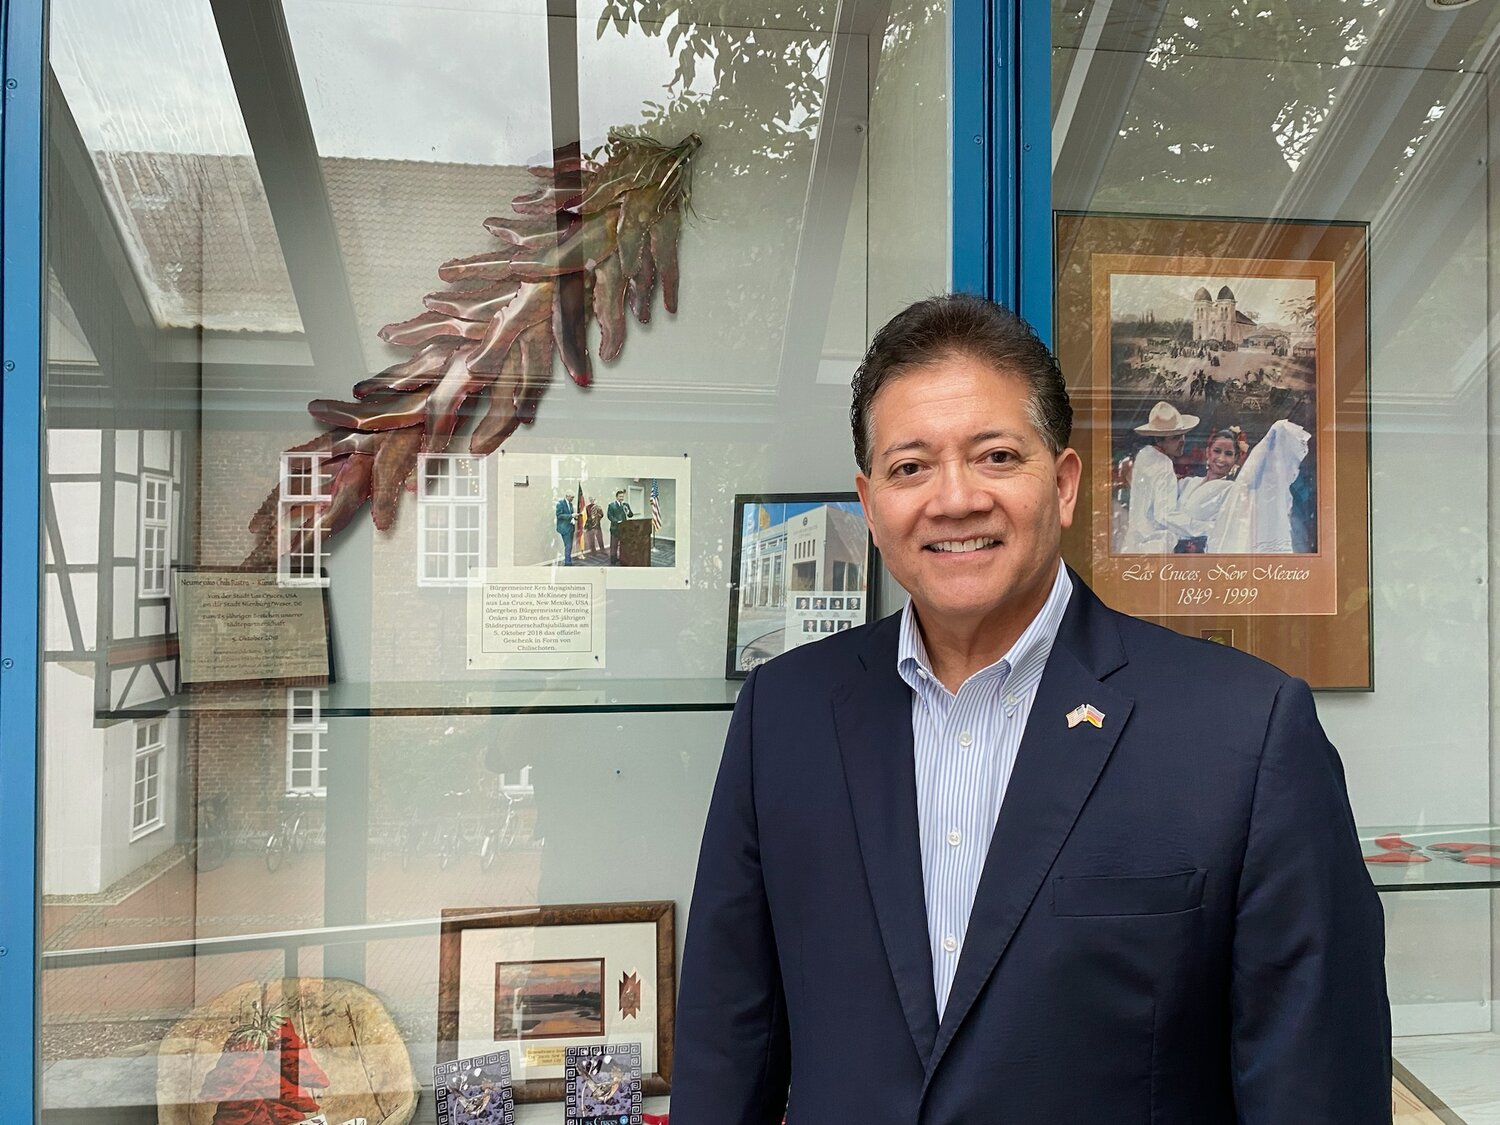 Las Cruces Mayor Ken Miyagishima, with photos of Las Cruces City Hall on the wall behind him.